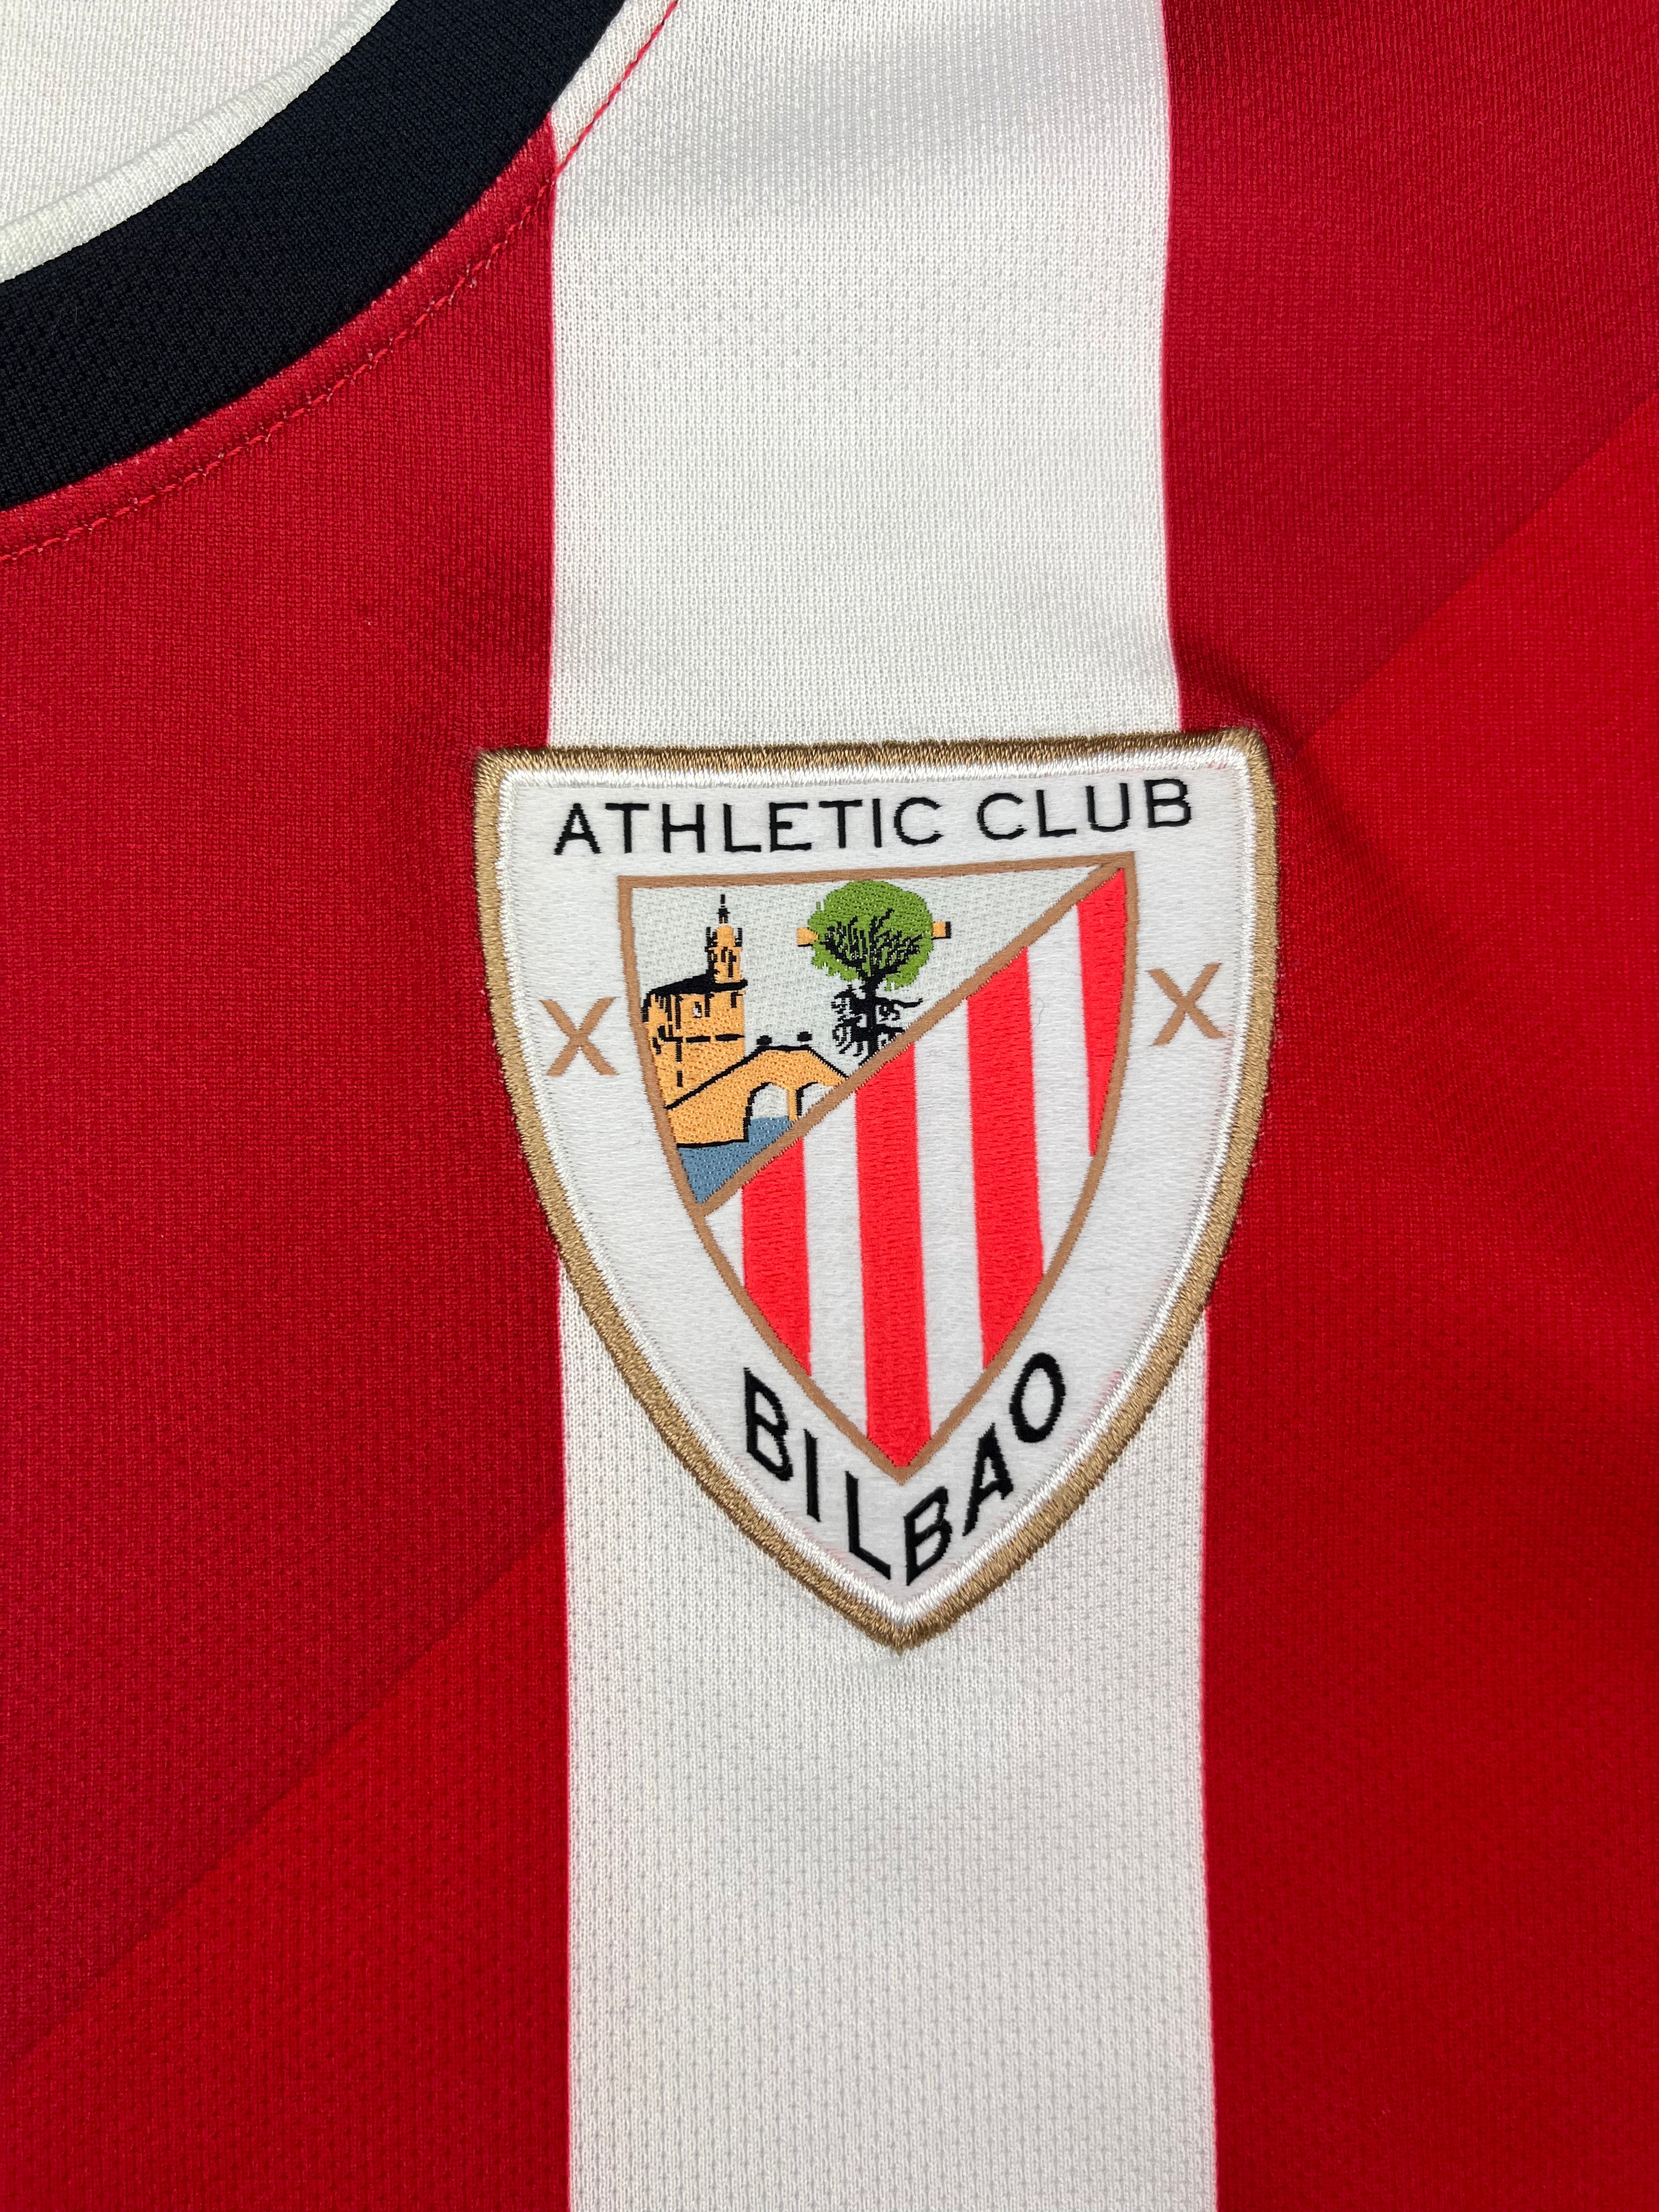 2014/15 Athletic Bilbao Home Shirt (XL) 9/10